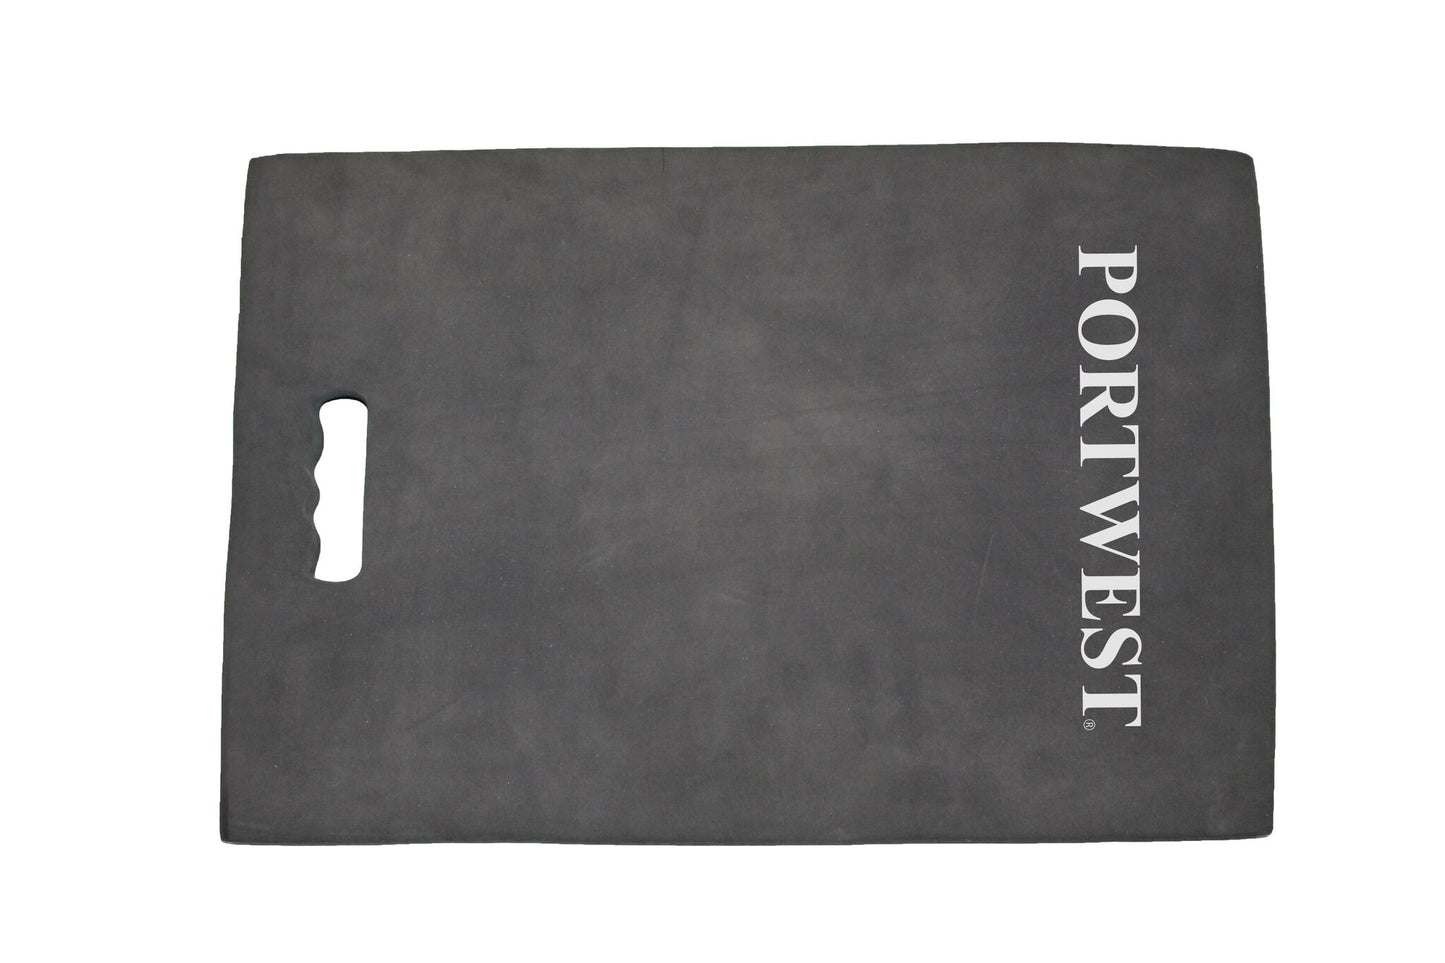 Portwest Total Comfort Kneeling Pad